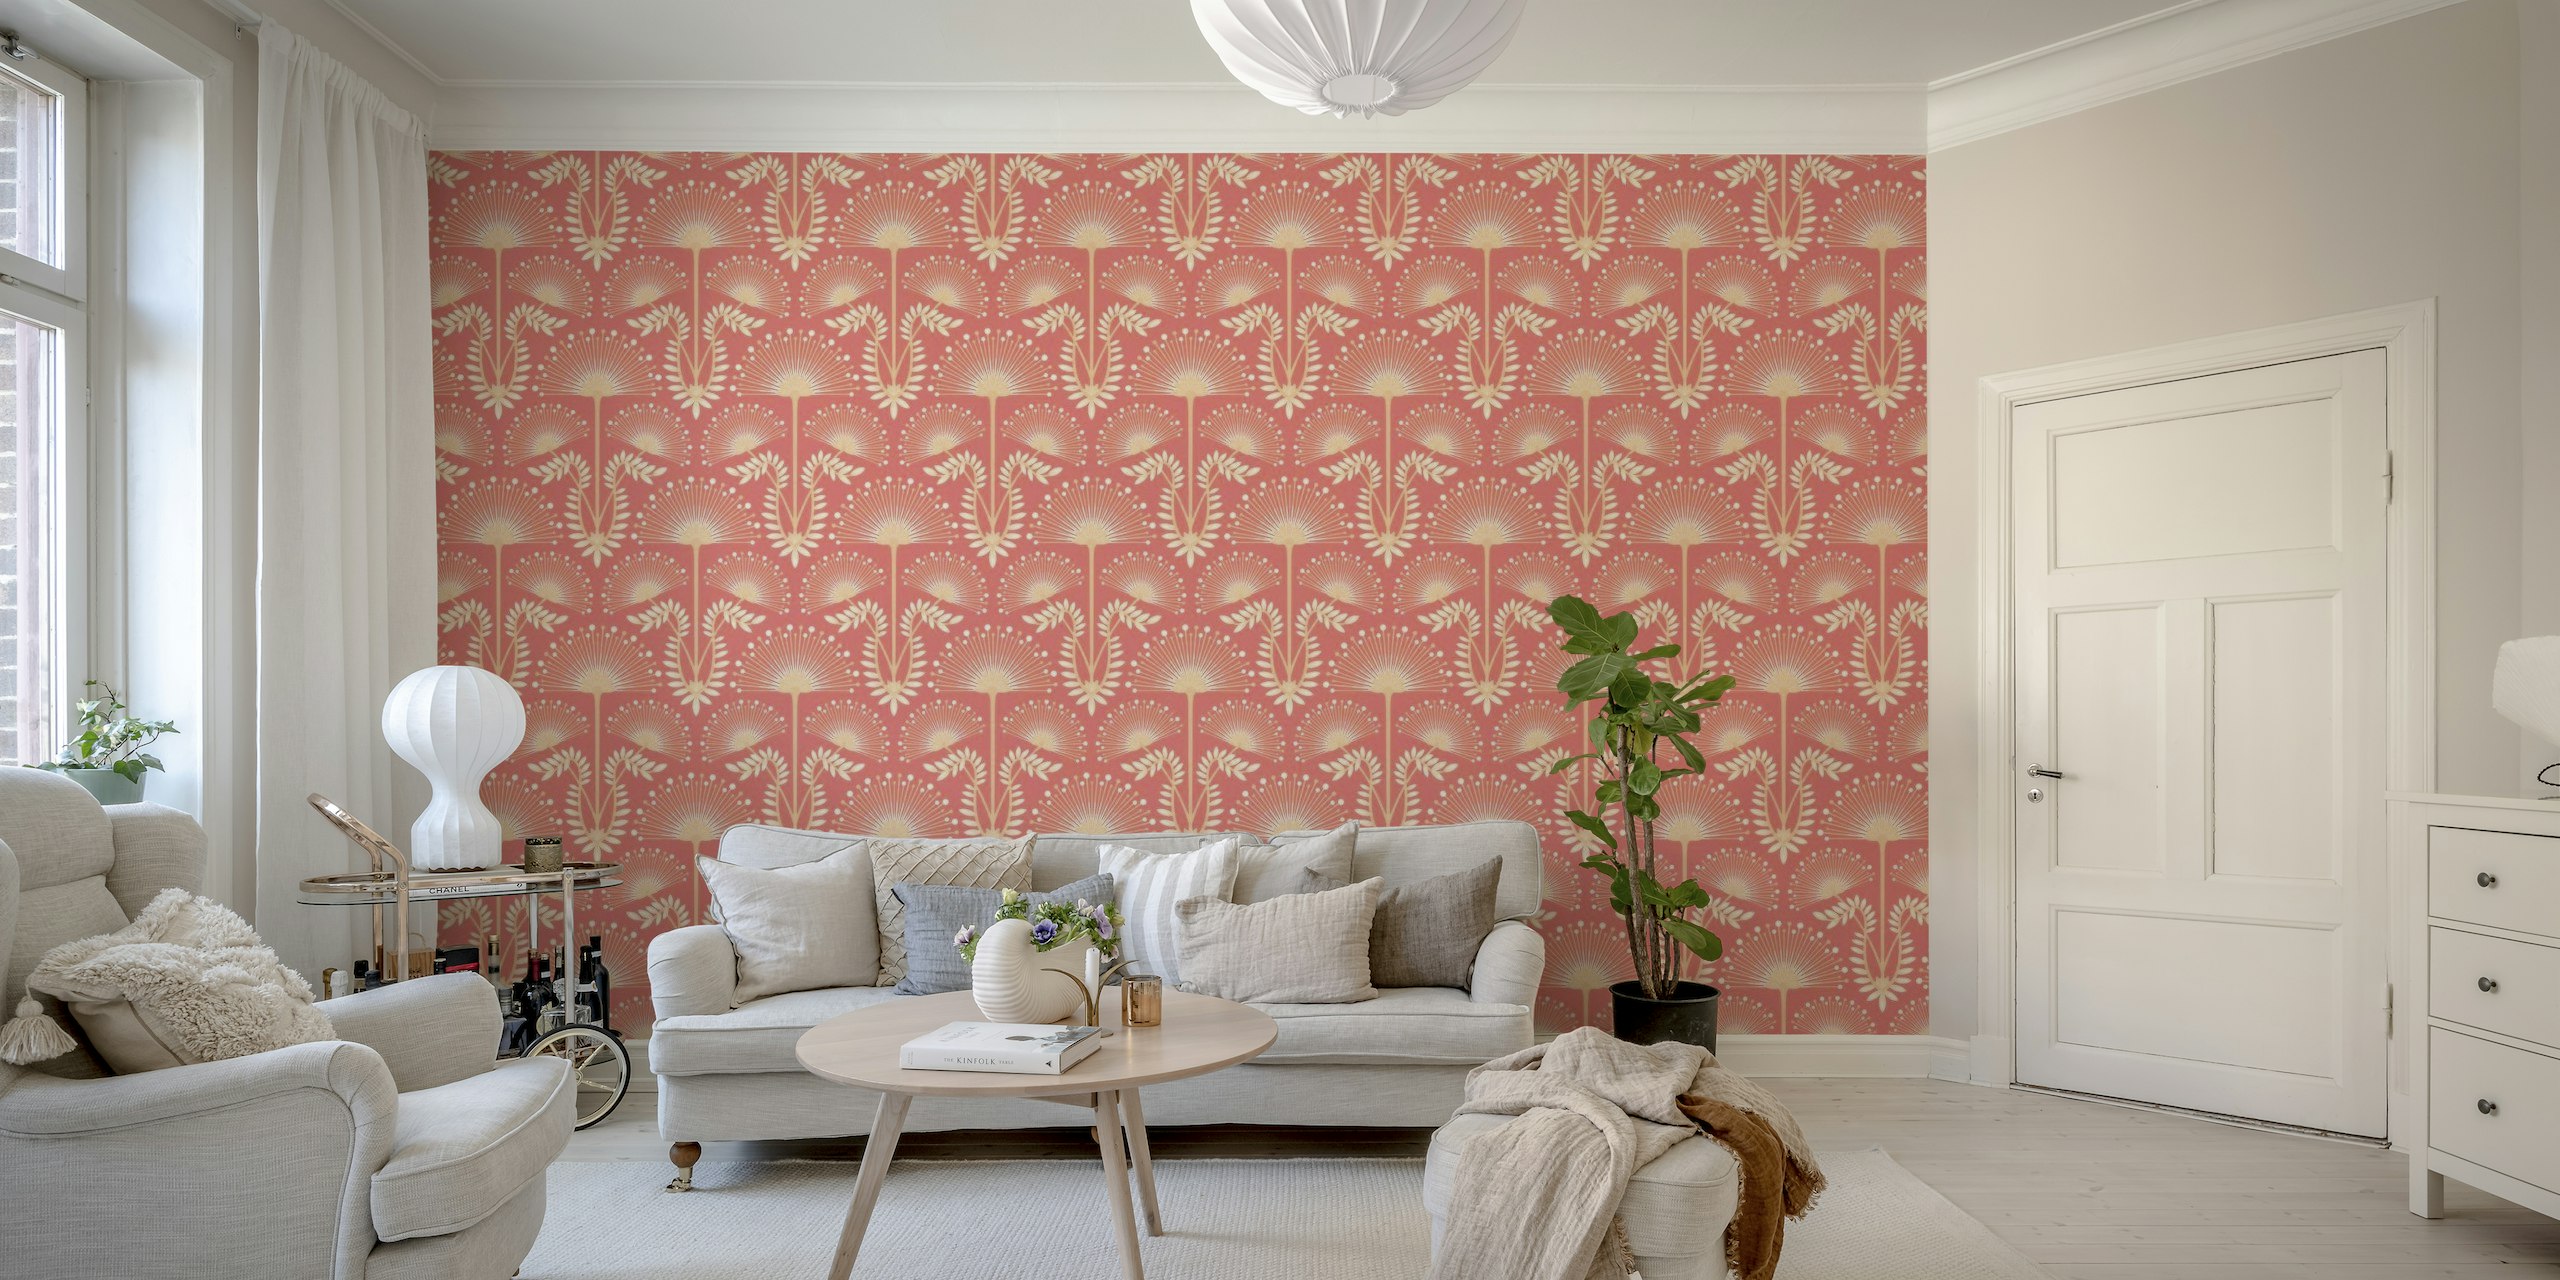 MIMOSA Art Deco Floral - Peach Coral - Large papel pintado